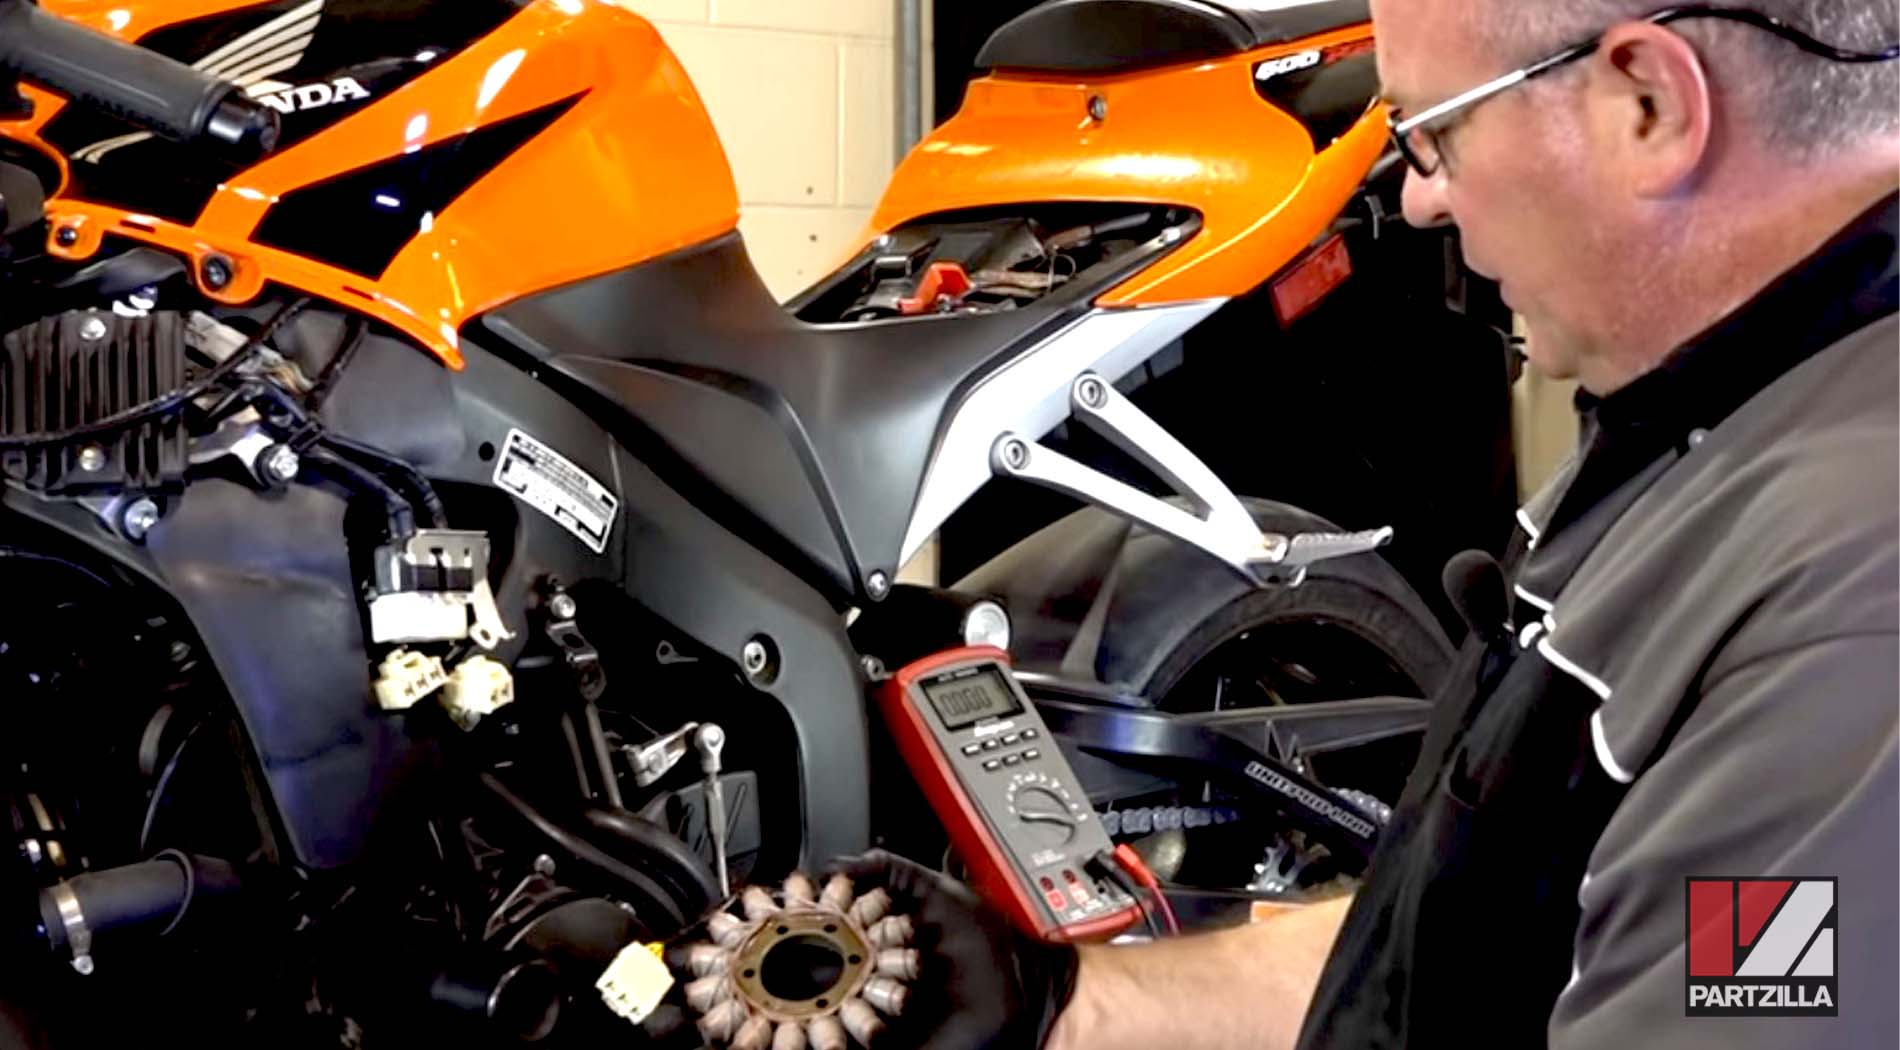 Motorcycle stator testing troubleshooting